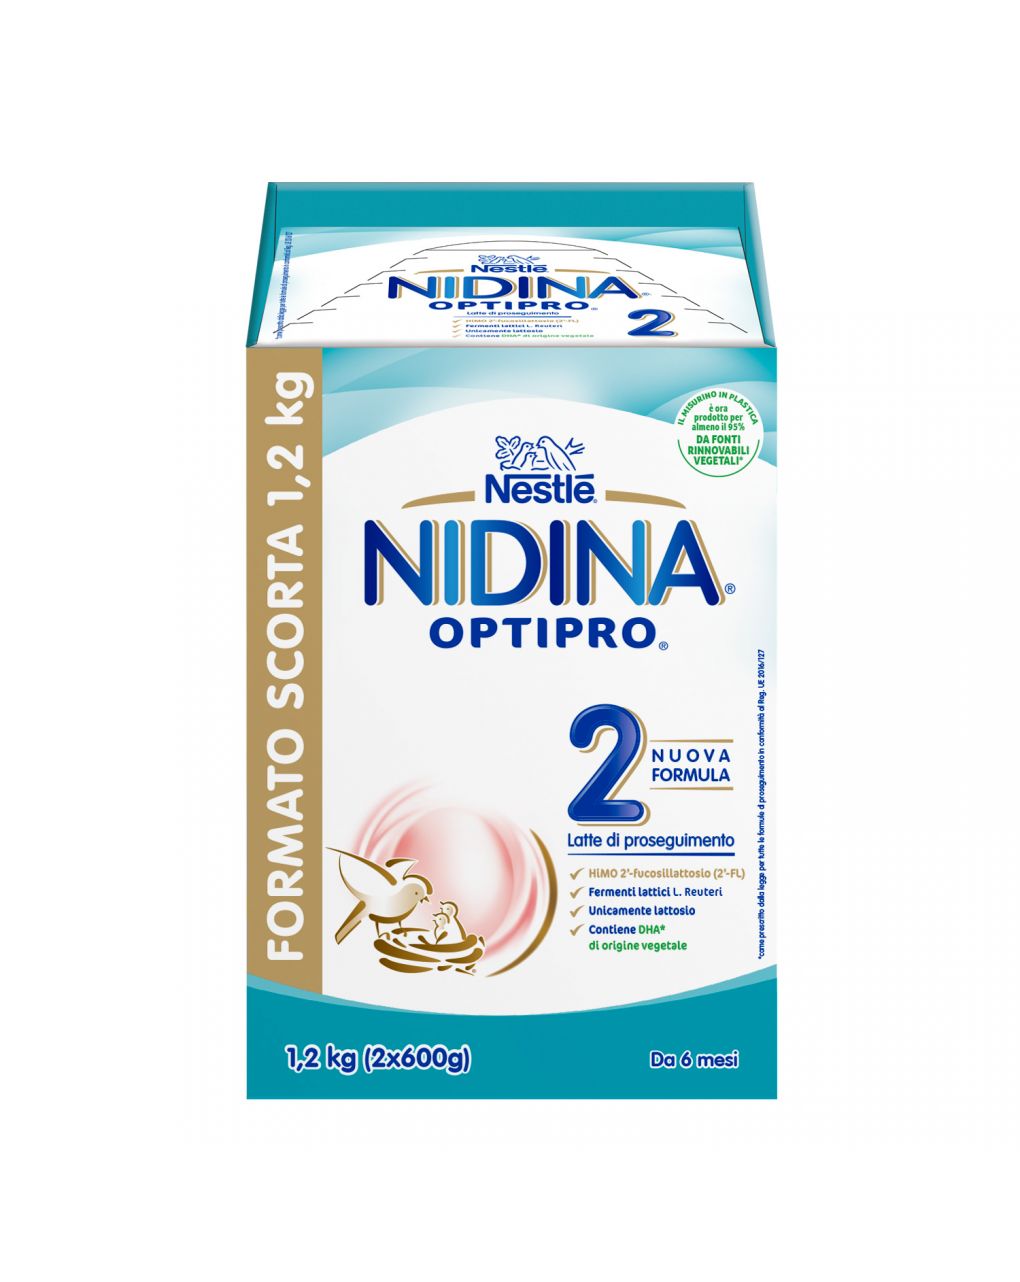 Nestlé nidina optipro 2 da 6 mesi latte di proseguimento in polvere - 1.2 kg (2x600g)